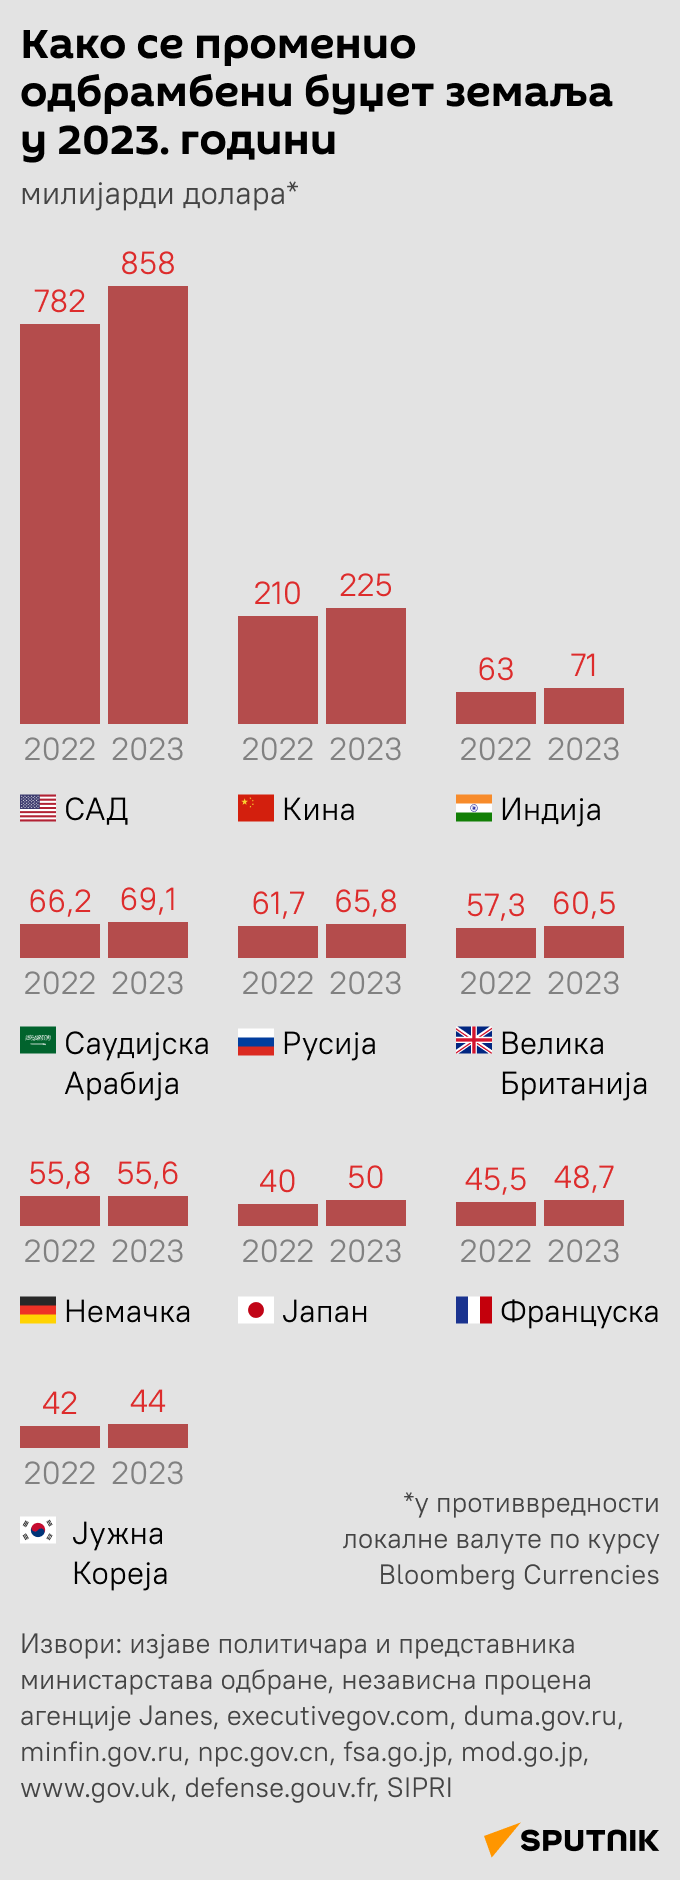 Инфографика Како се променио одбрамбени буџет земаља у 2023. години  ЋИРИЛИЦА моб - Sputnik Србија